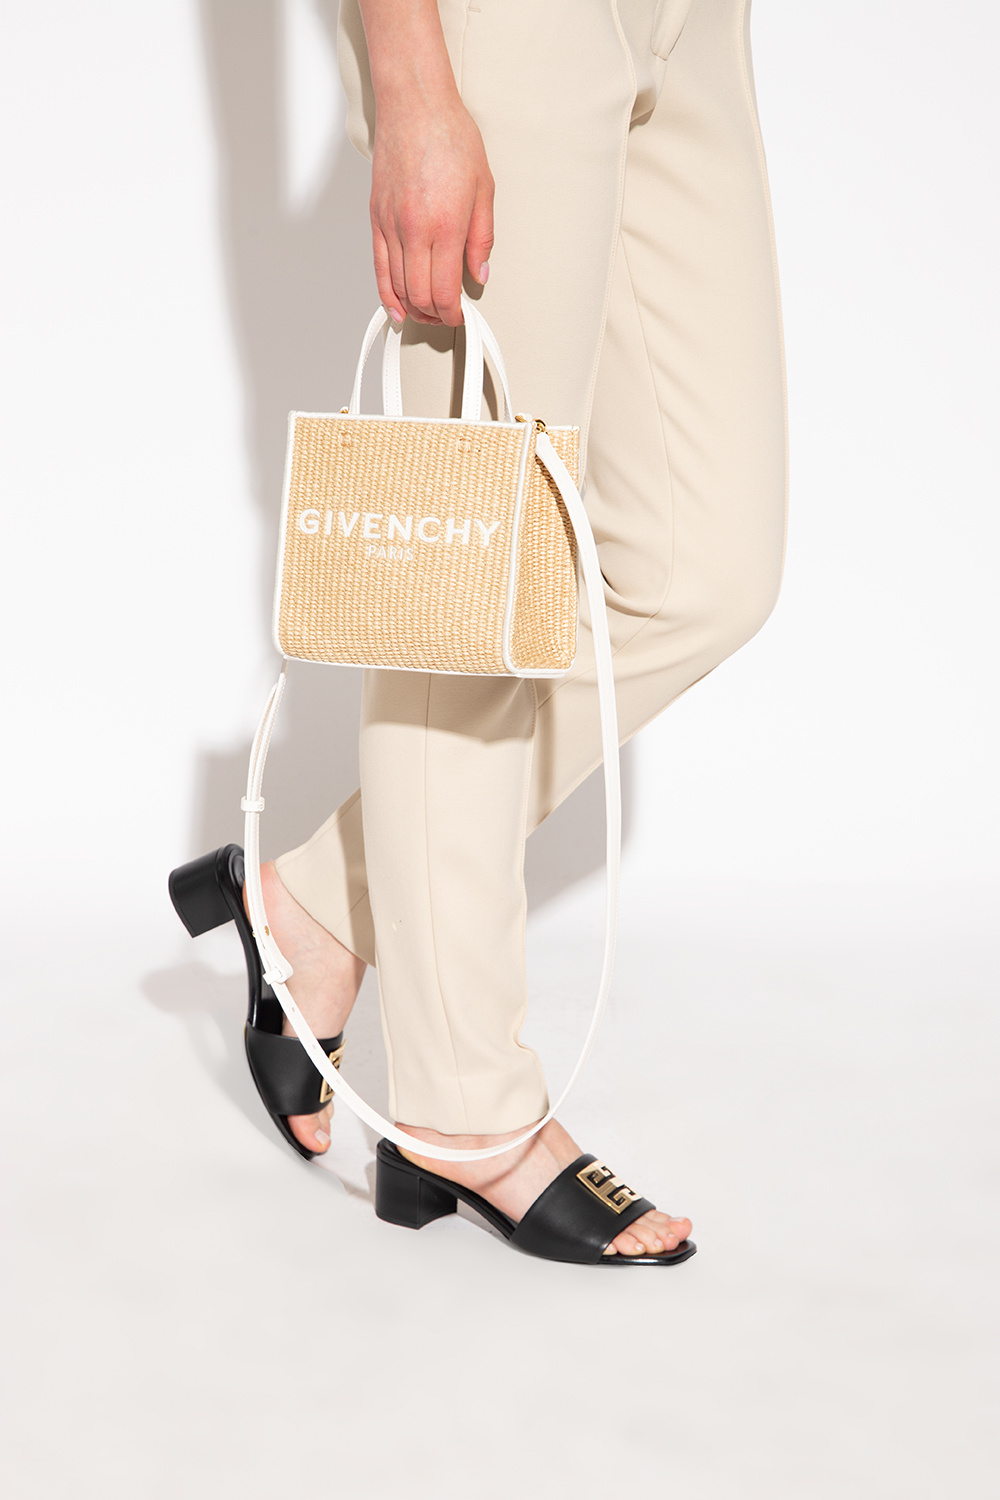 Givenchy ‘G-Tote Mini’ Boys bag